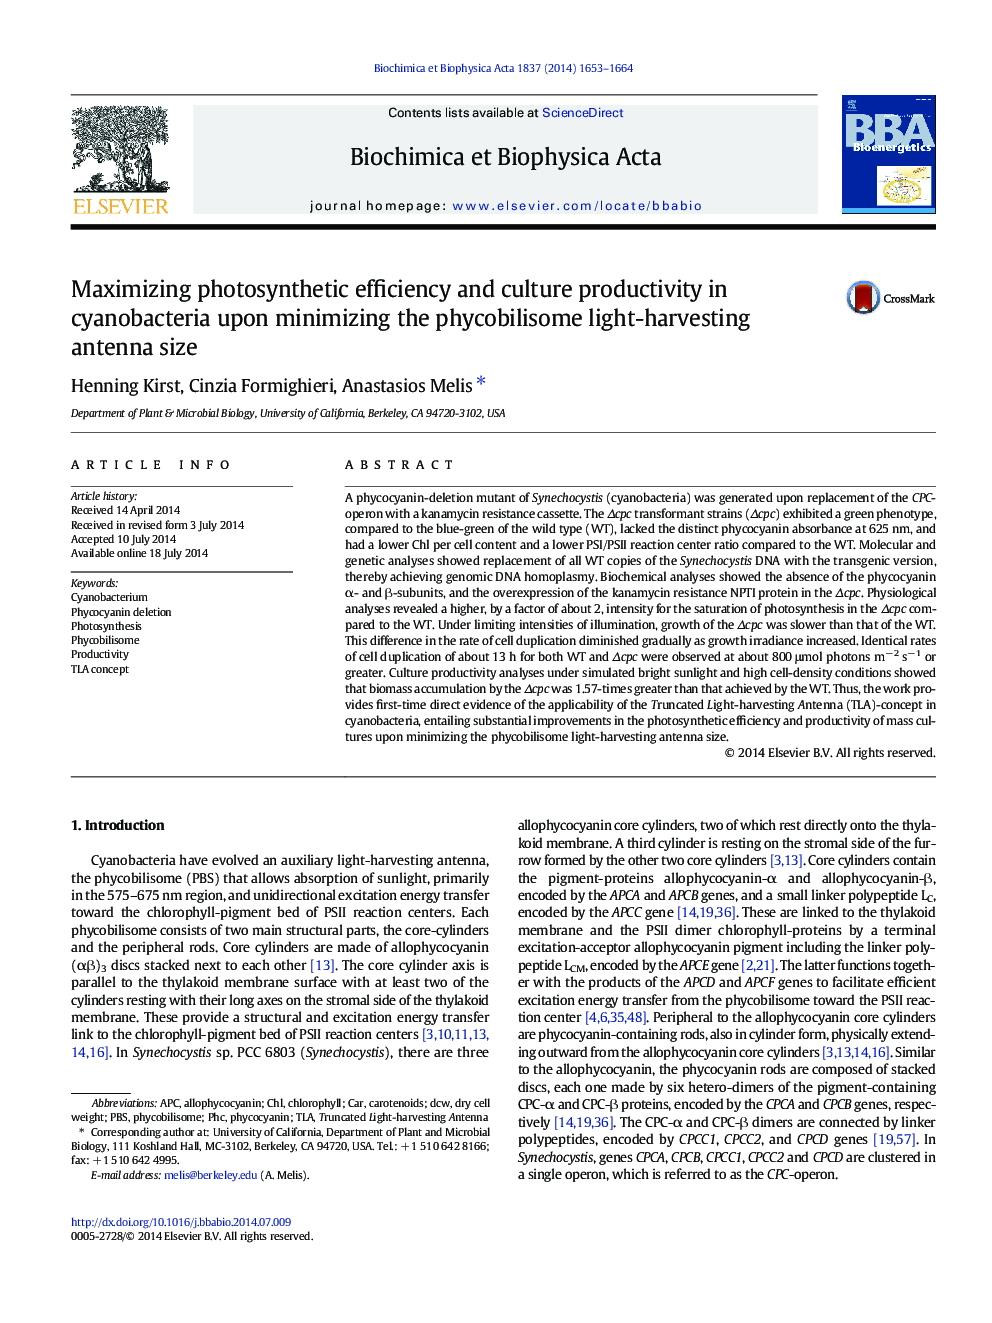 Maximizing photosynthetic efficiency and culture productivity in cyanobacteria upon minimizing the phycobilisome light-harvesting antenna size